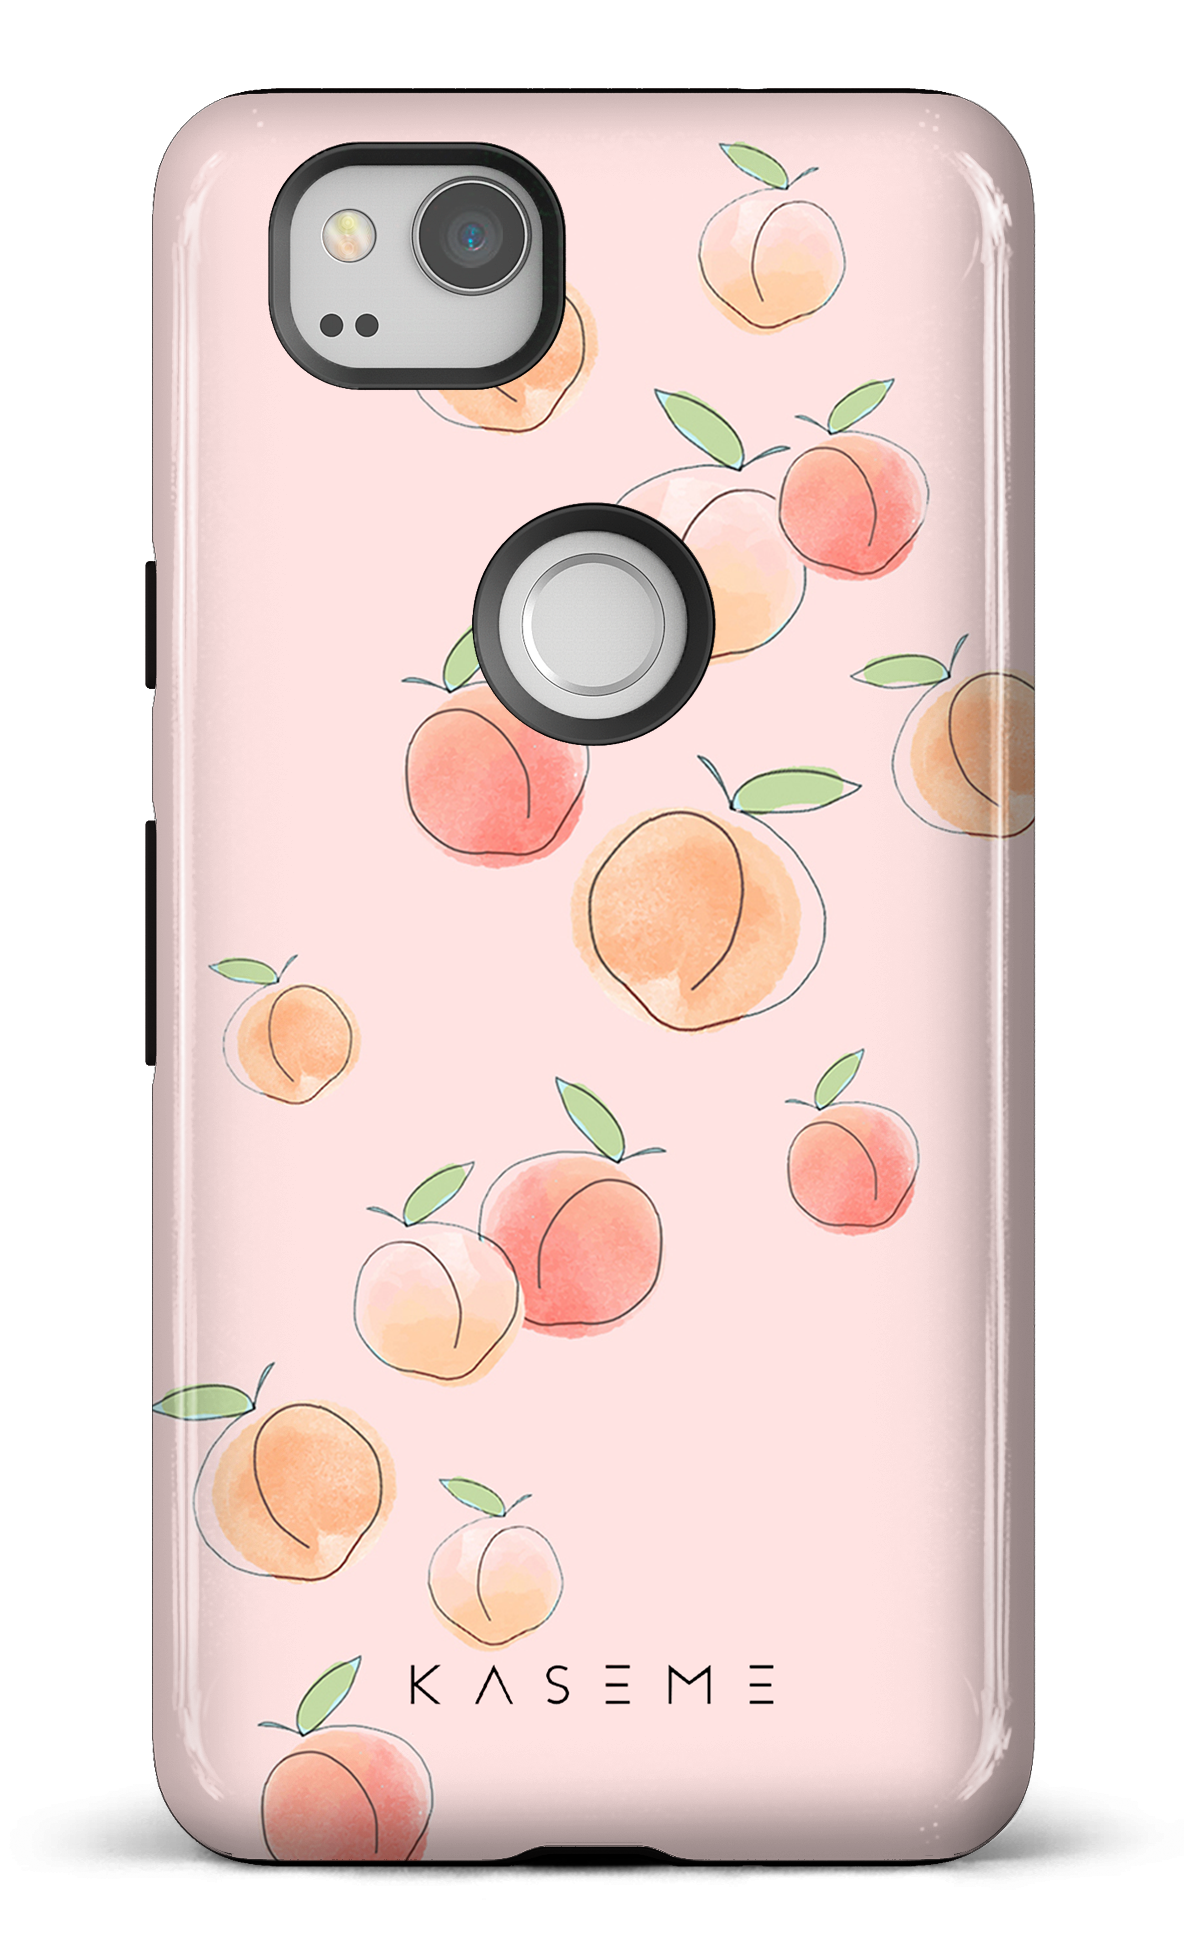 Peachy pink - Google Pixel 2